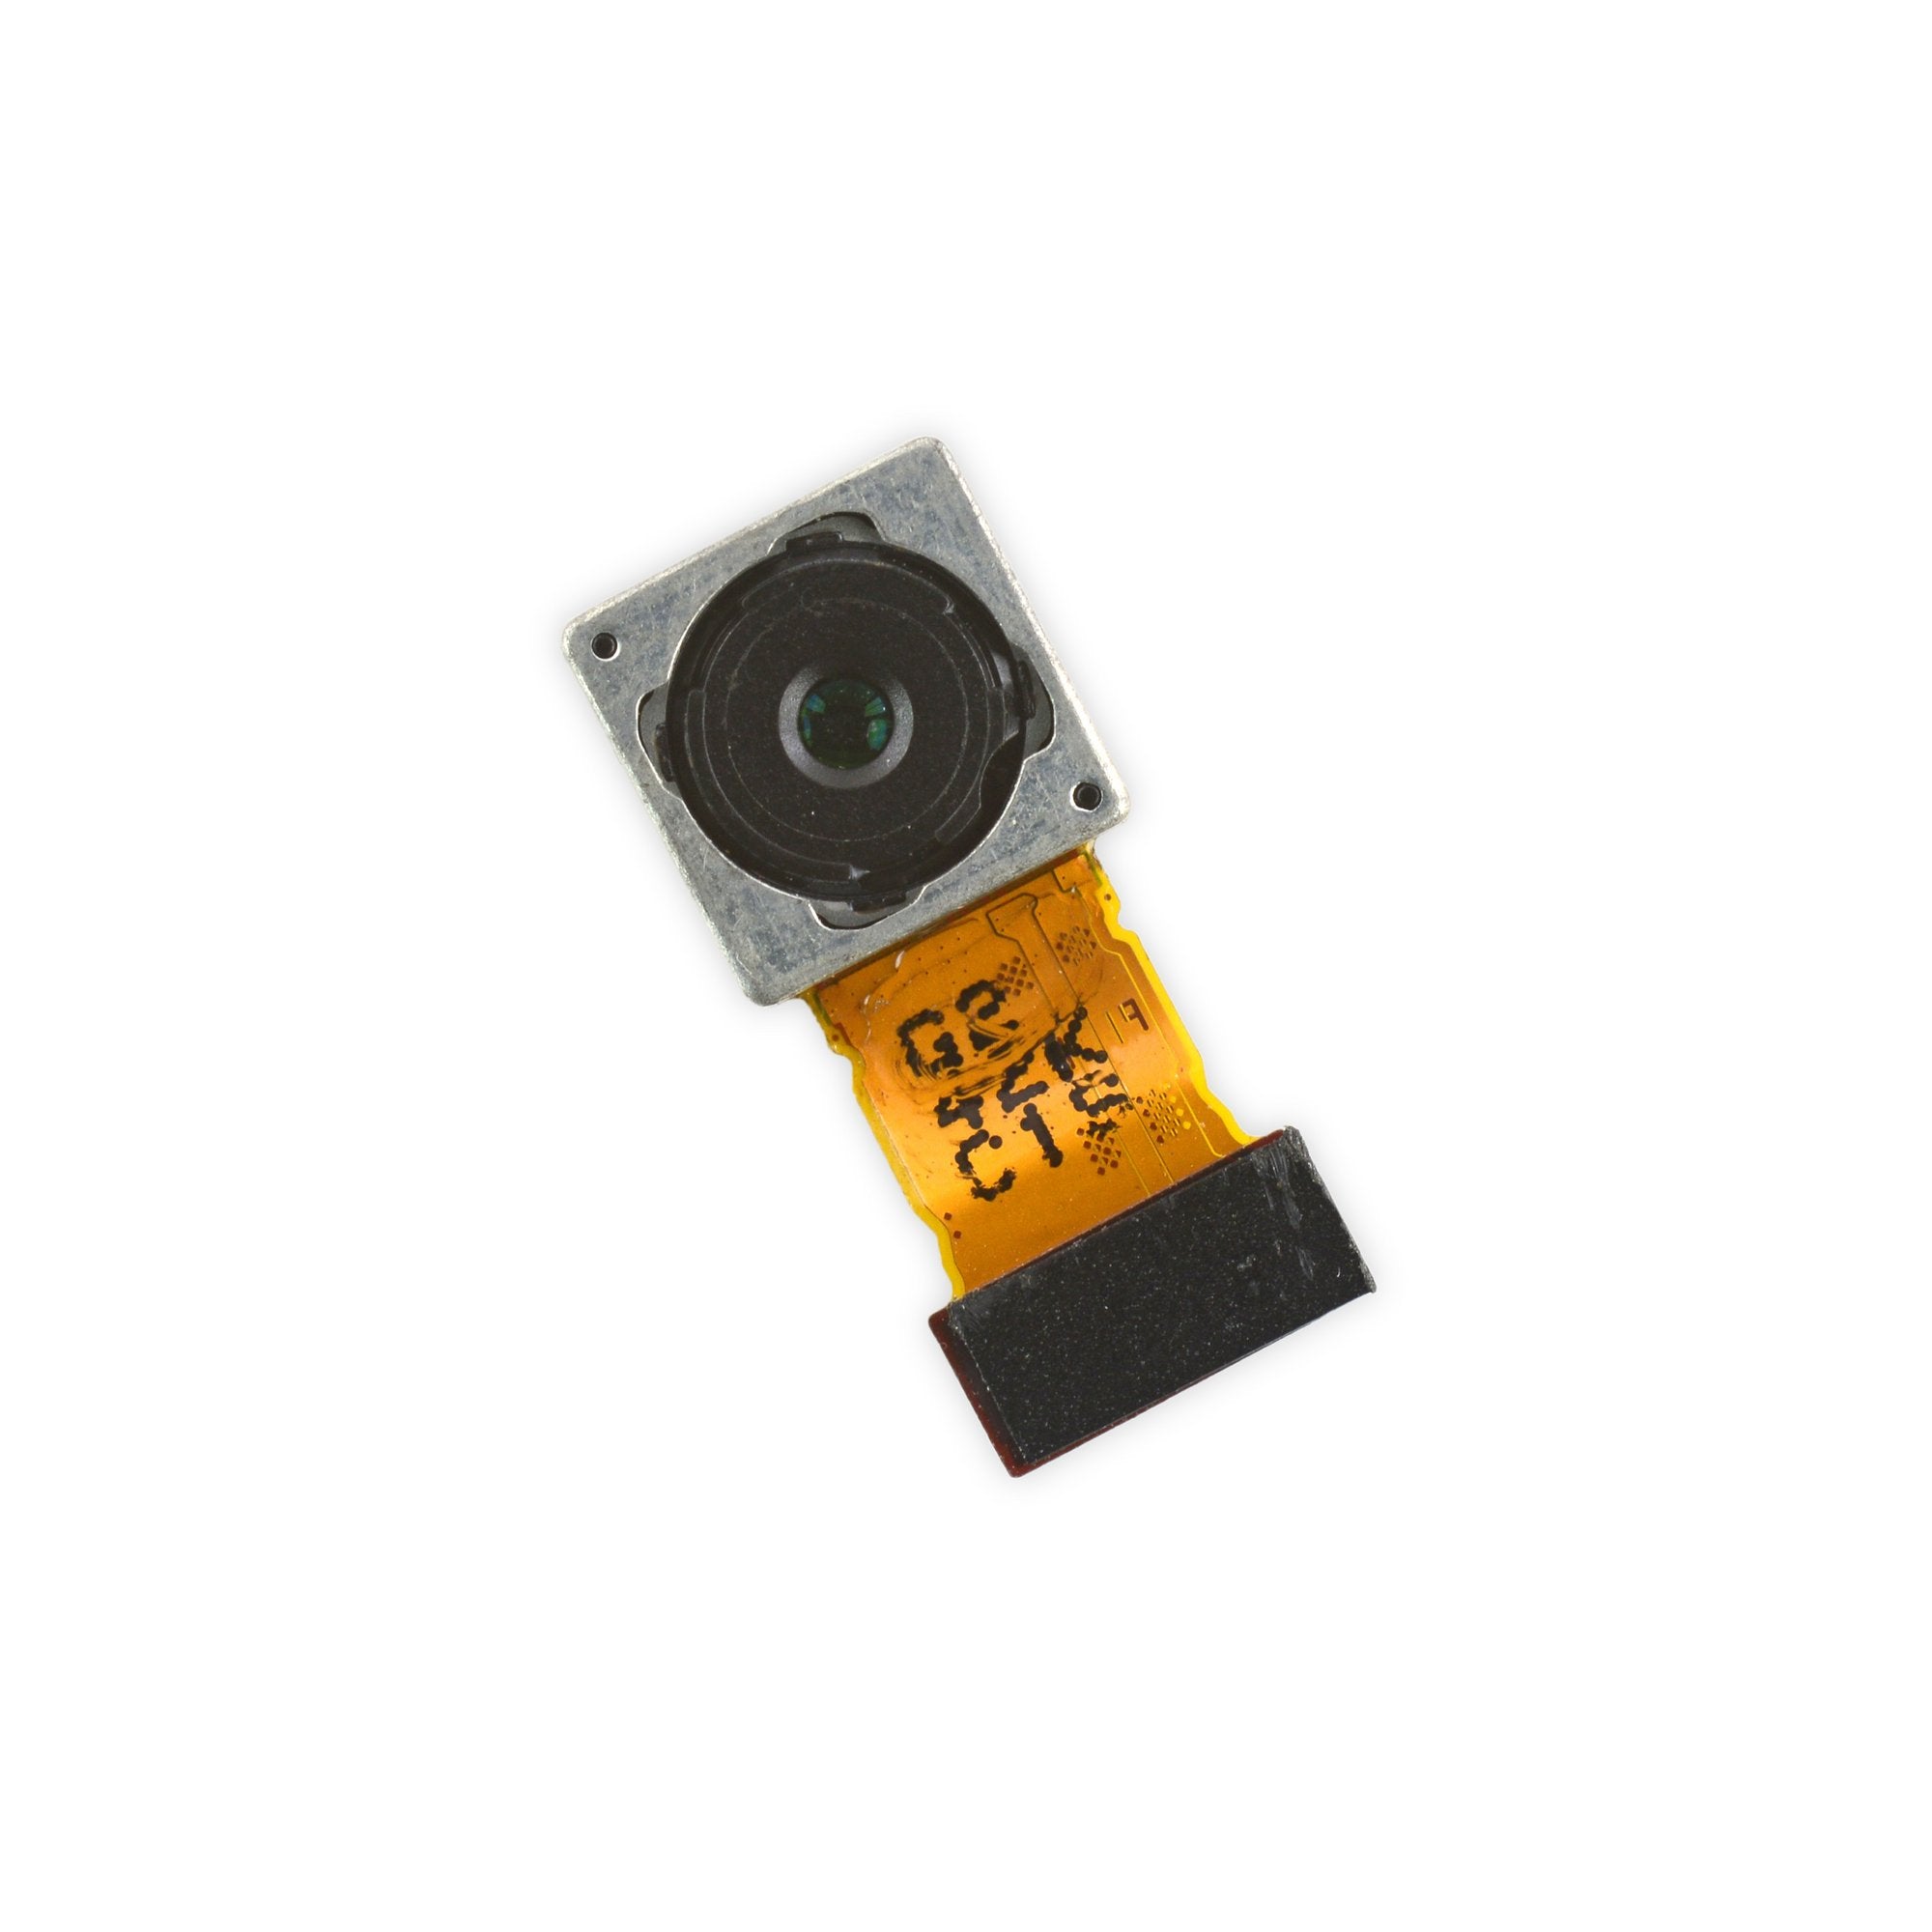 Sony Xperia Z2 Rear Camera